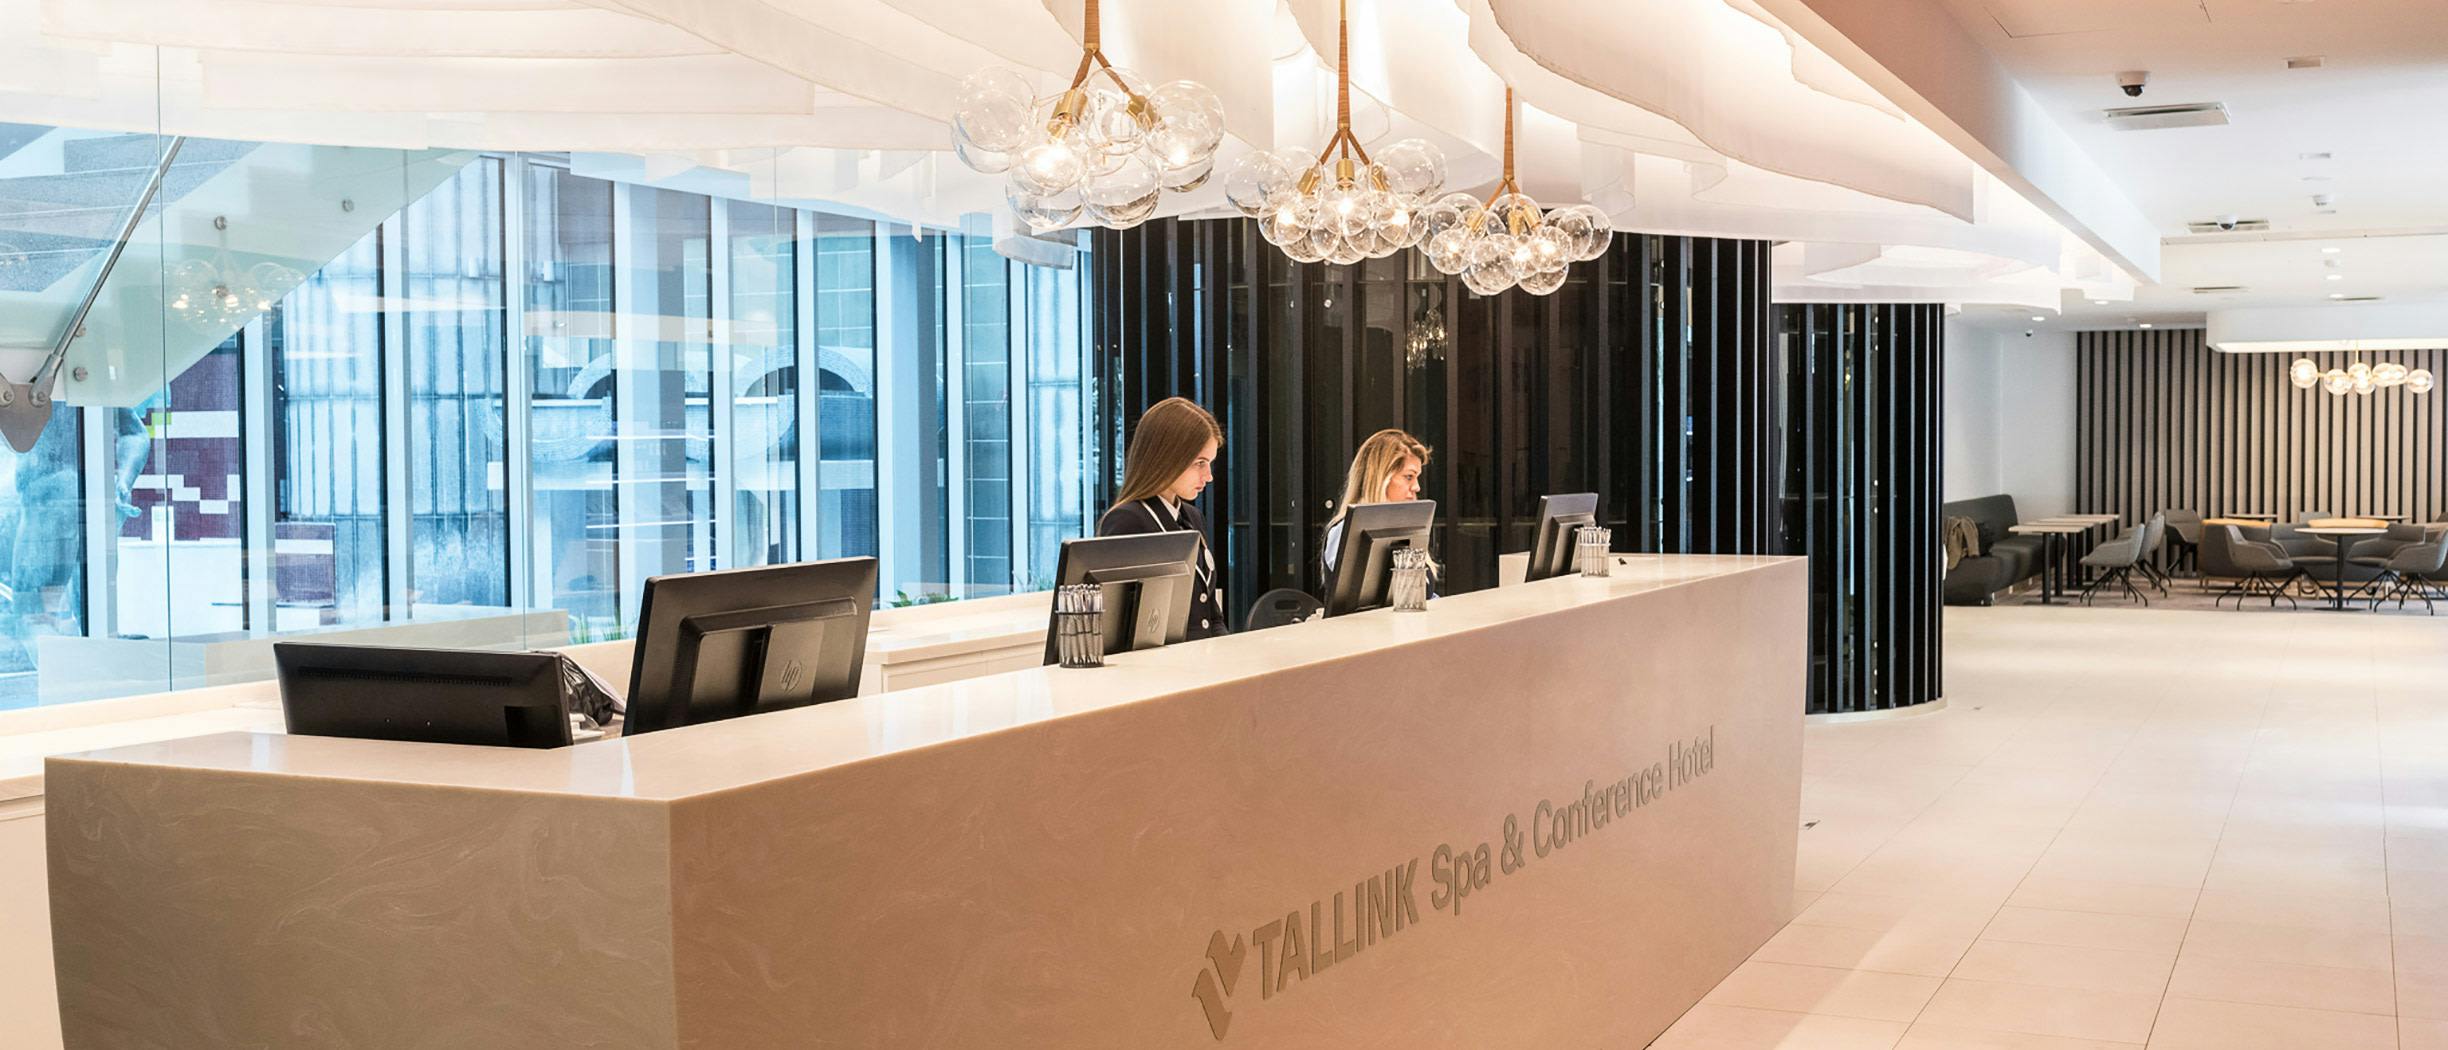 Tallink Spa & Conference Hotel - Tallink Hotels